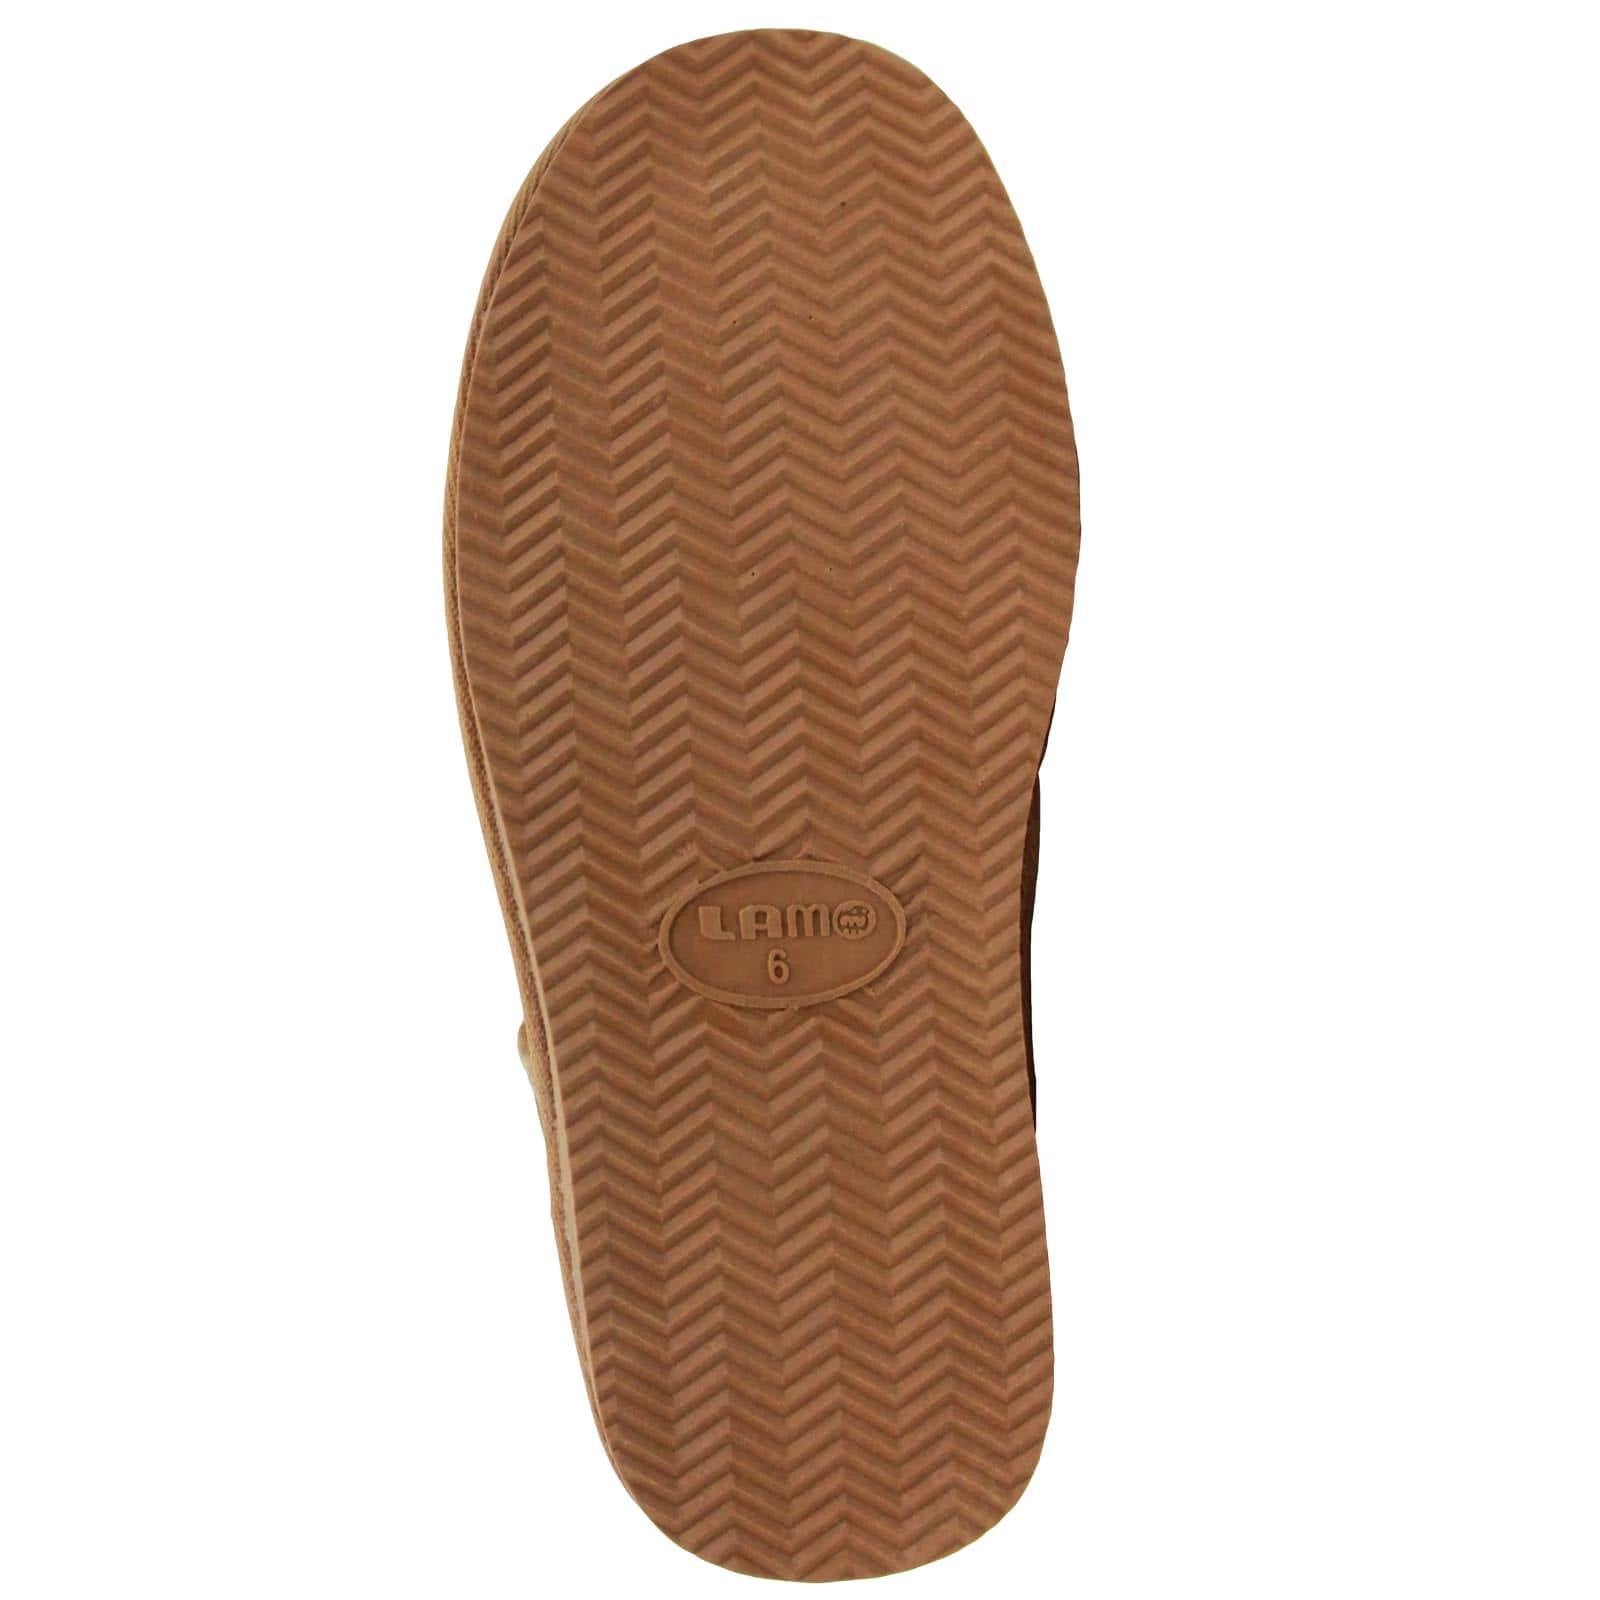 Classic 9" Boot - [variant_title] - Lamo Footwear